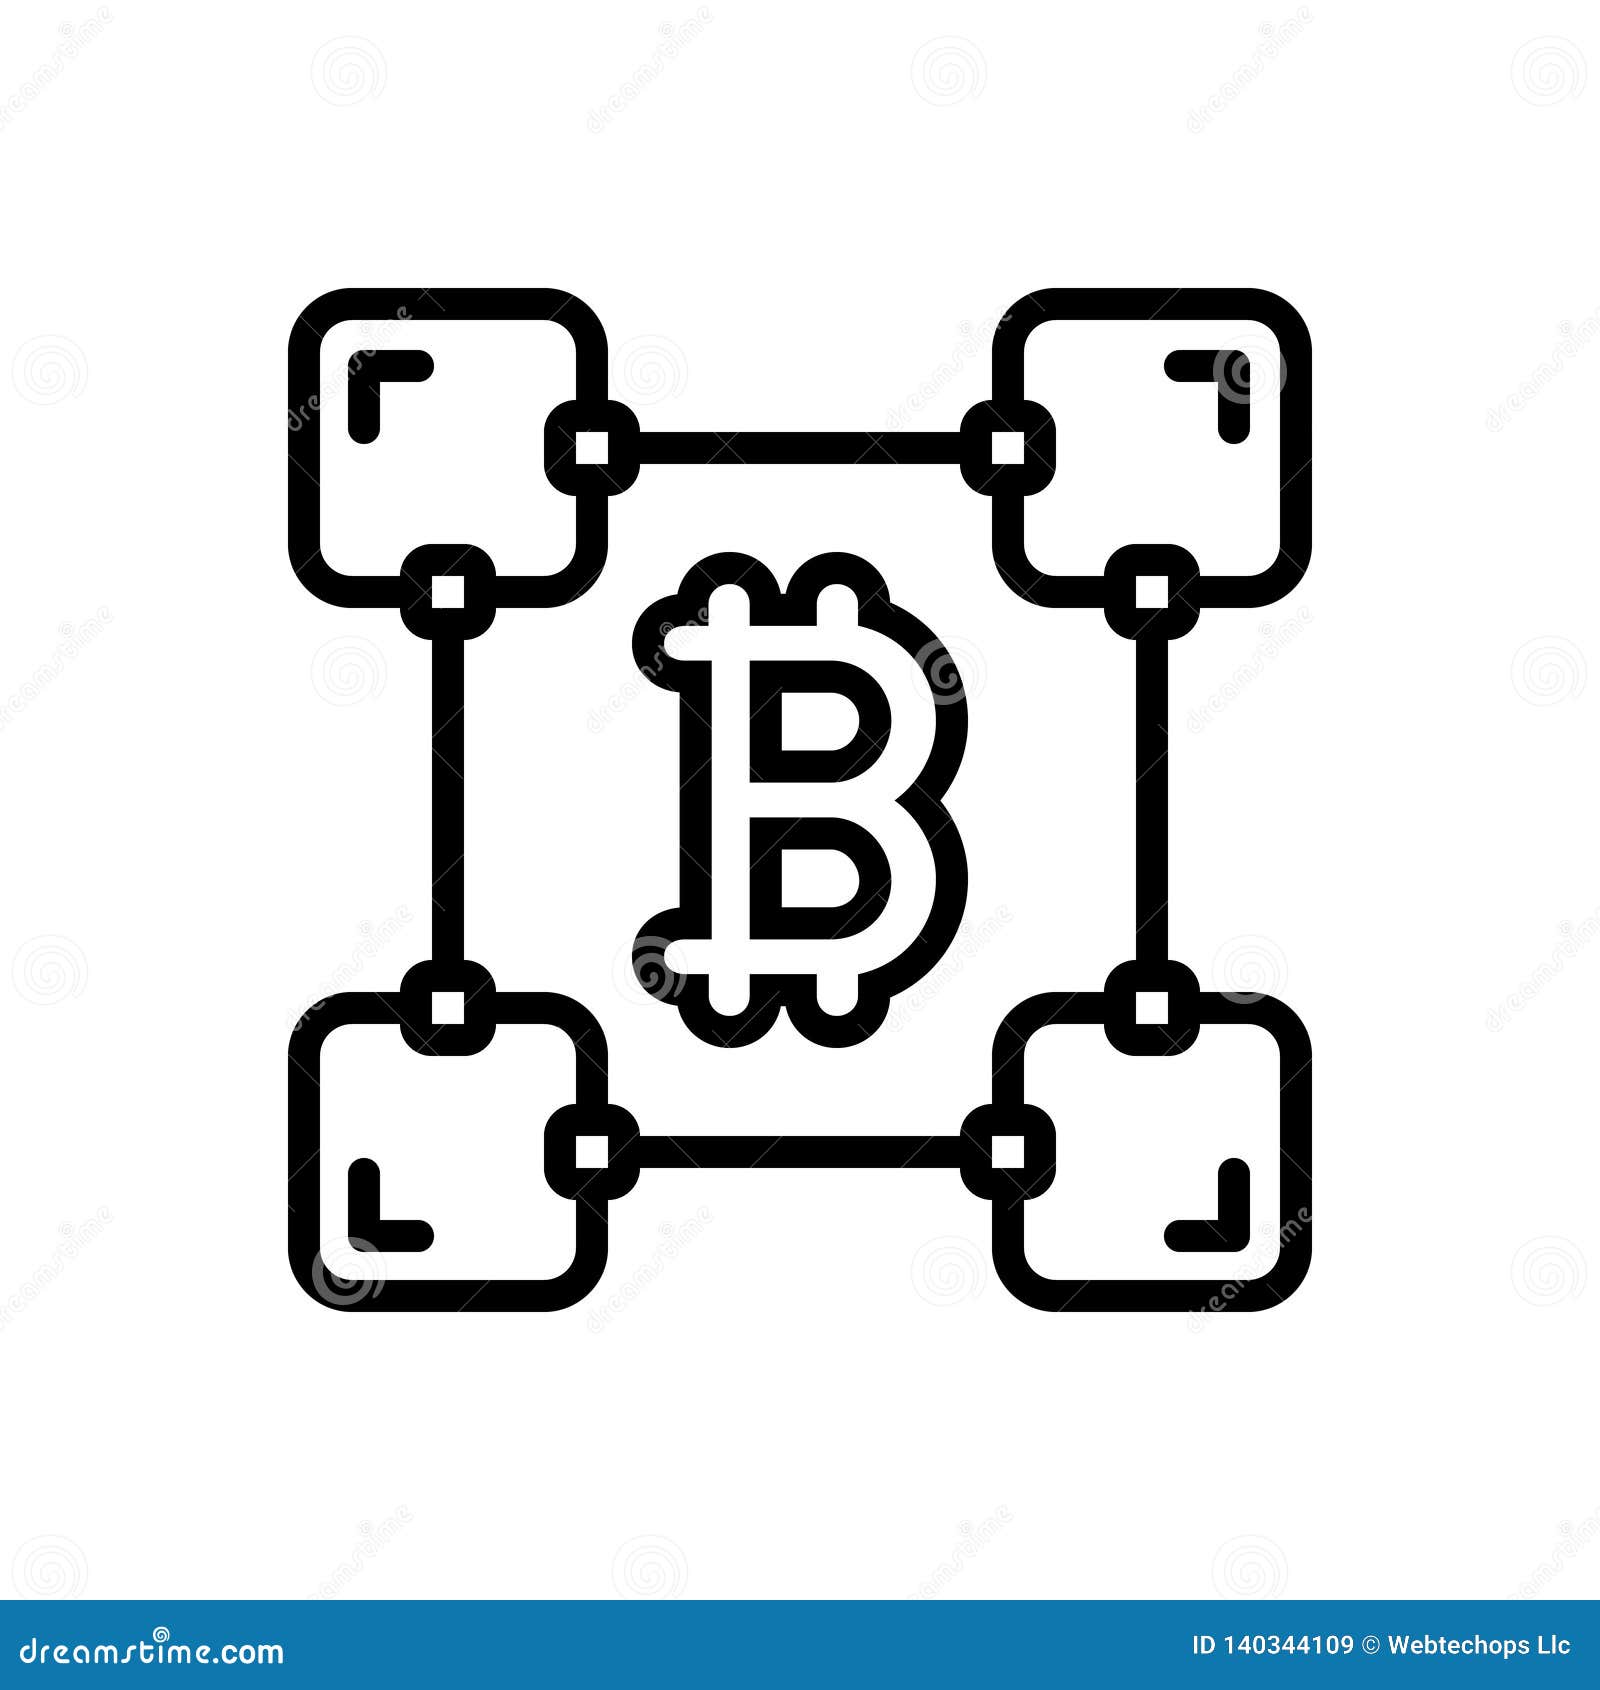 blockchain black and white